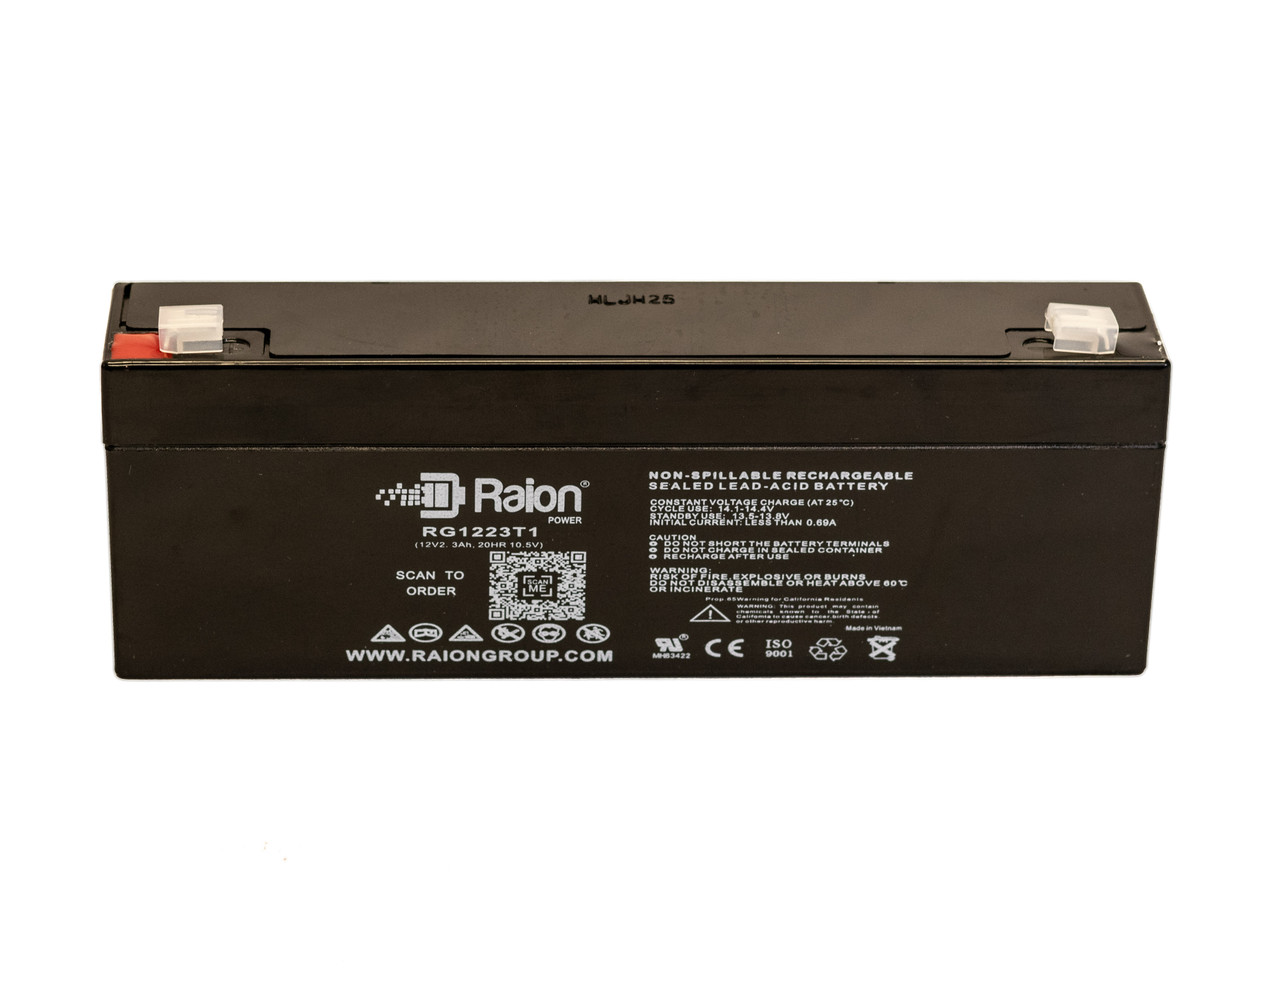 Raion Power 12V 2.3Ah SLA Battery With T1 Terminals For Mortara ELI 250c ECG Recorder